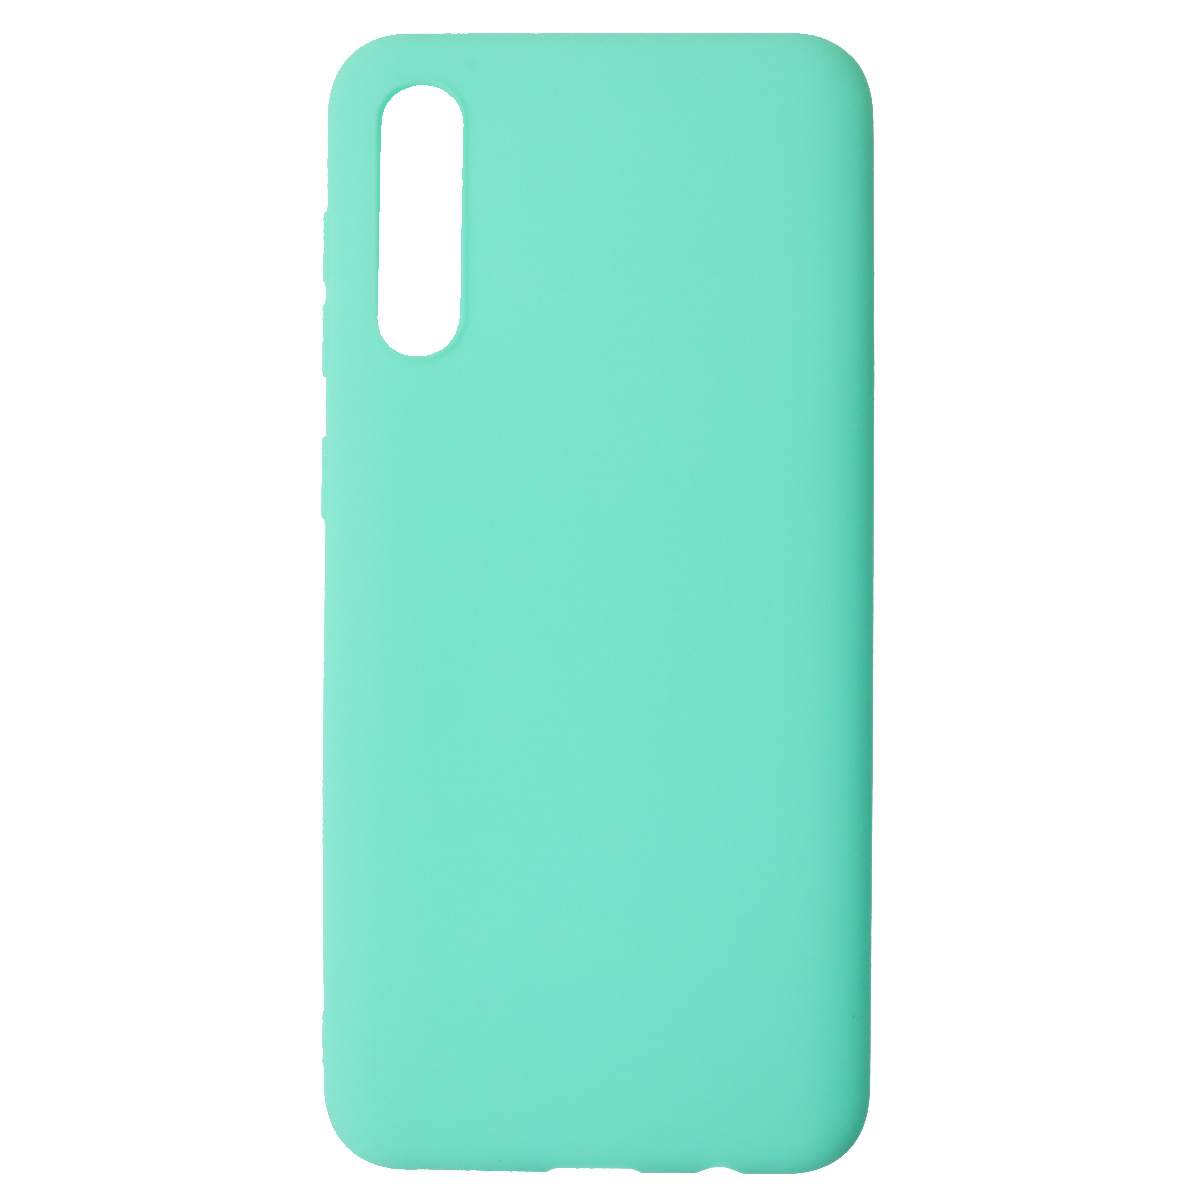 Чехол накладка Soft Touch для SAMSUNG Galaxy A50 (SM-A505), A30s (SM-A307), A50s (SM-A507), силикон, цвет бирюзовый